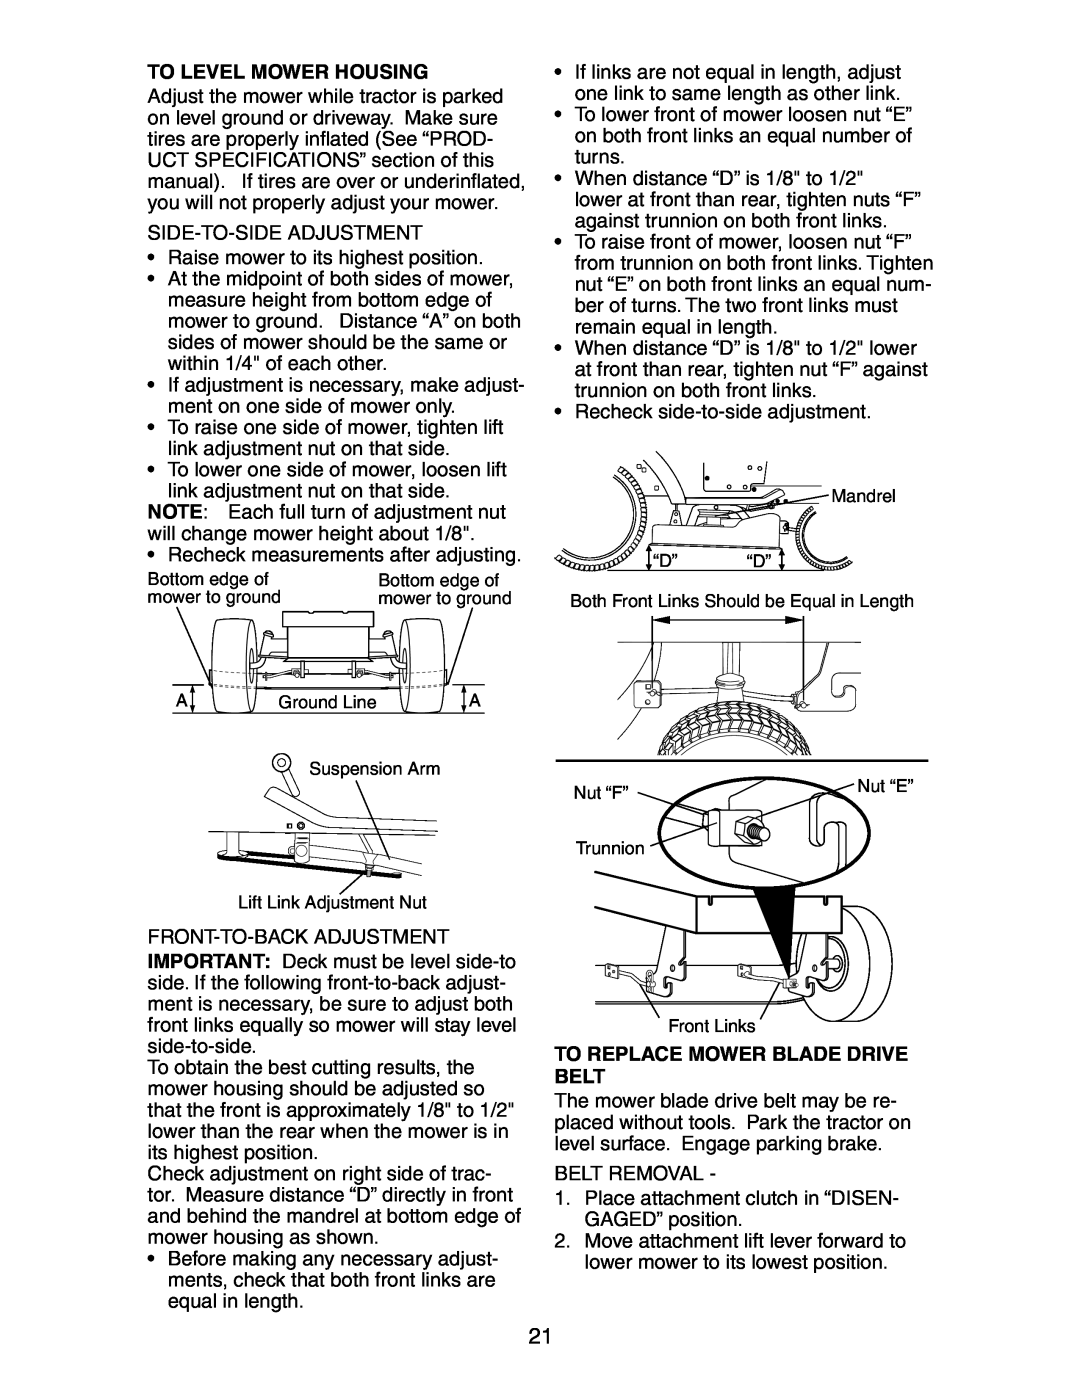 Poulan 271150 manual To Level Mower Housing, To Replace Mower Blade Drive Belt 